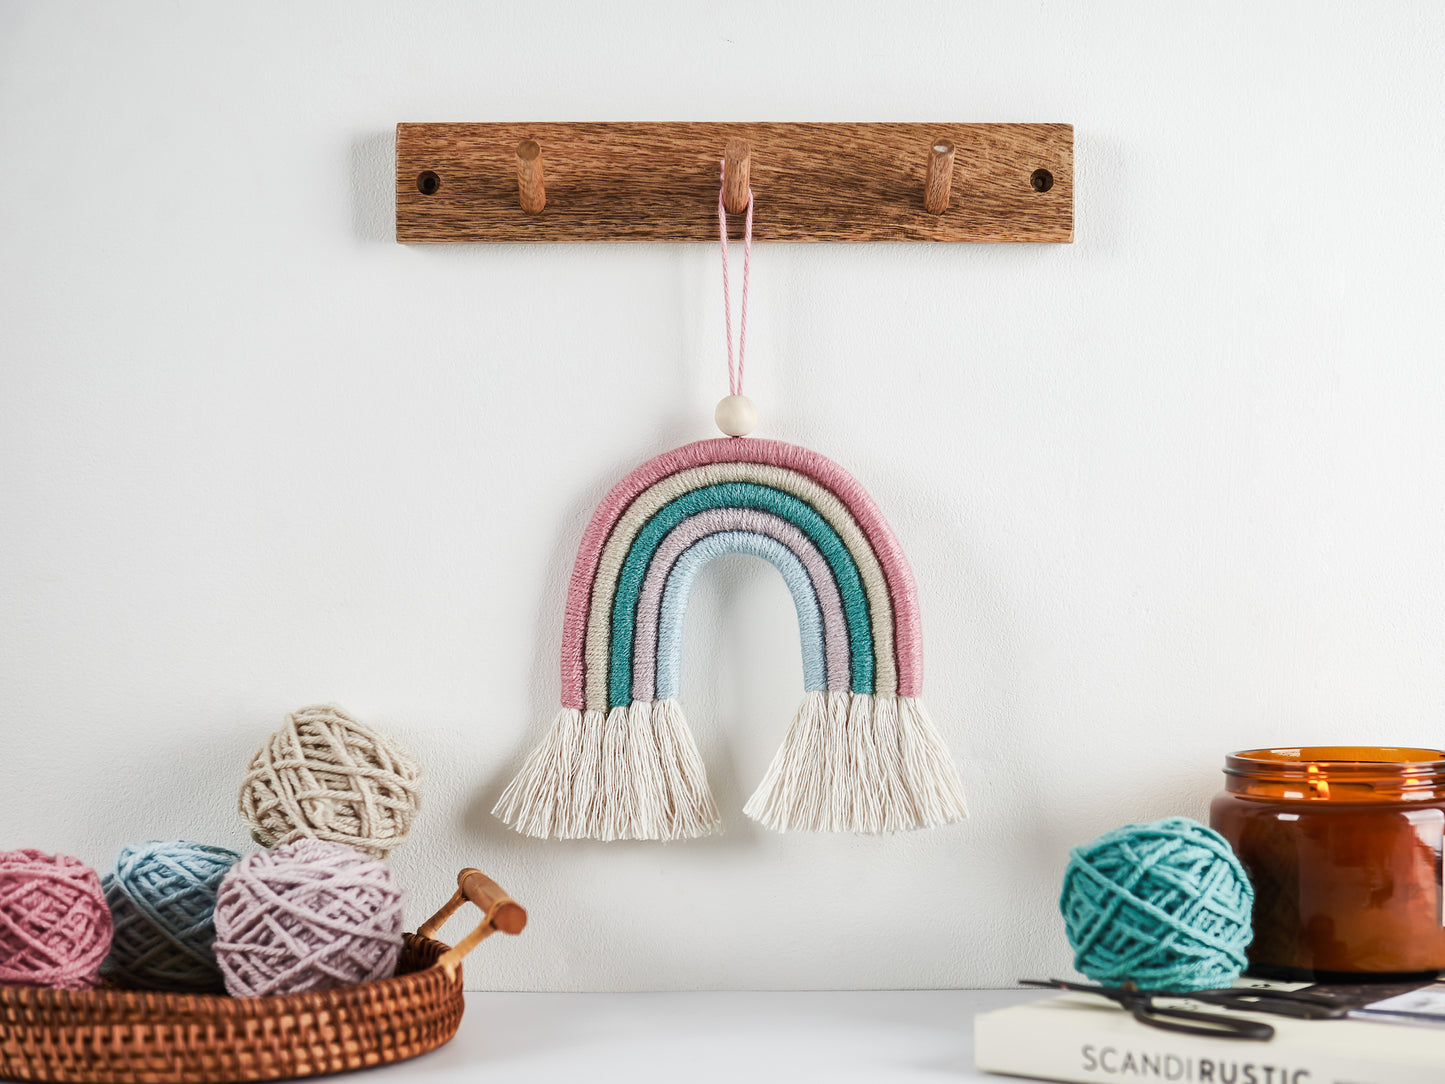 Make Your Own Misty Rainbow Macrame Craft Kit